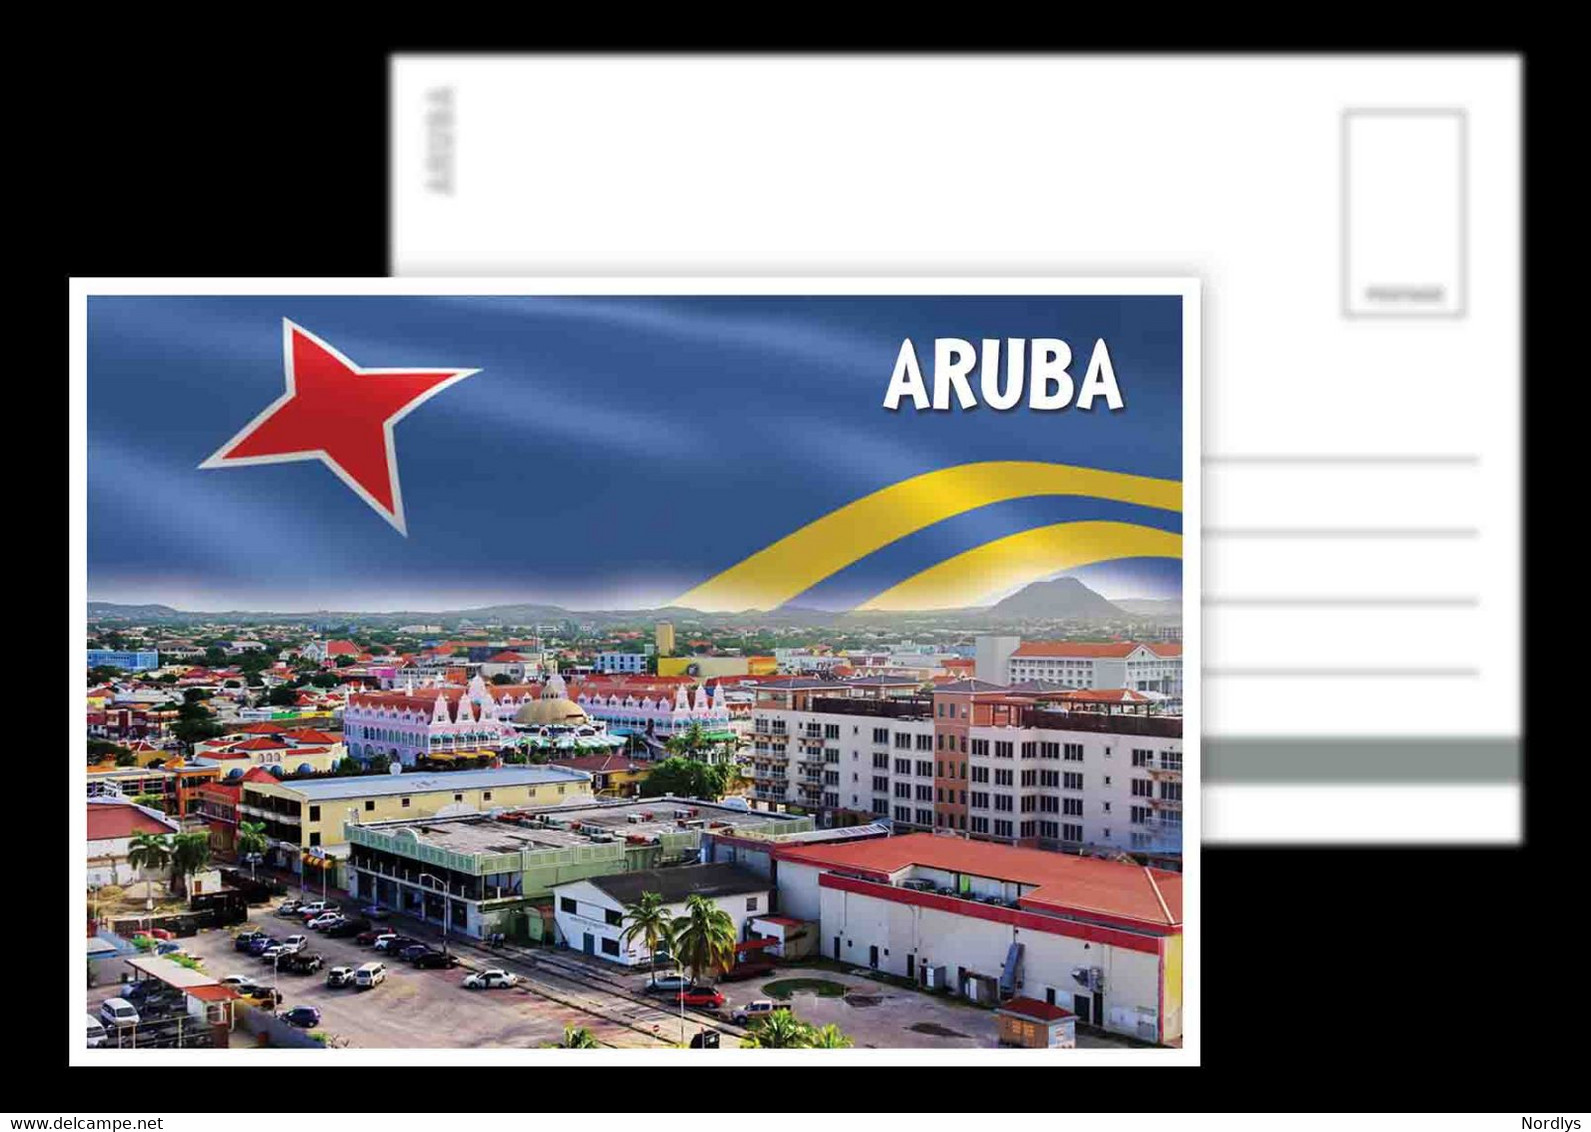 Aruba / Oranjested / Postcard /View Card - Aruba